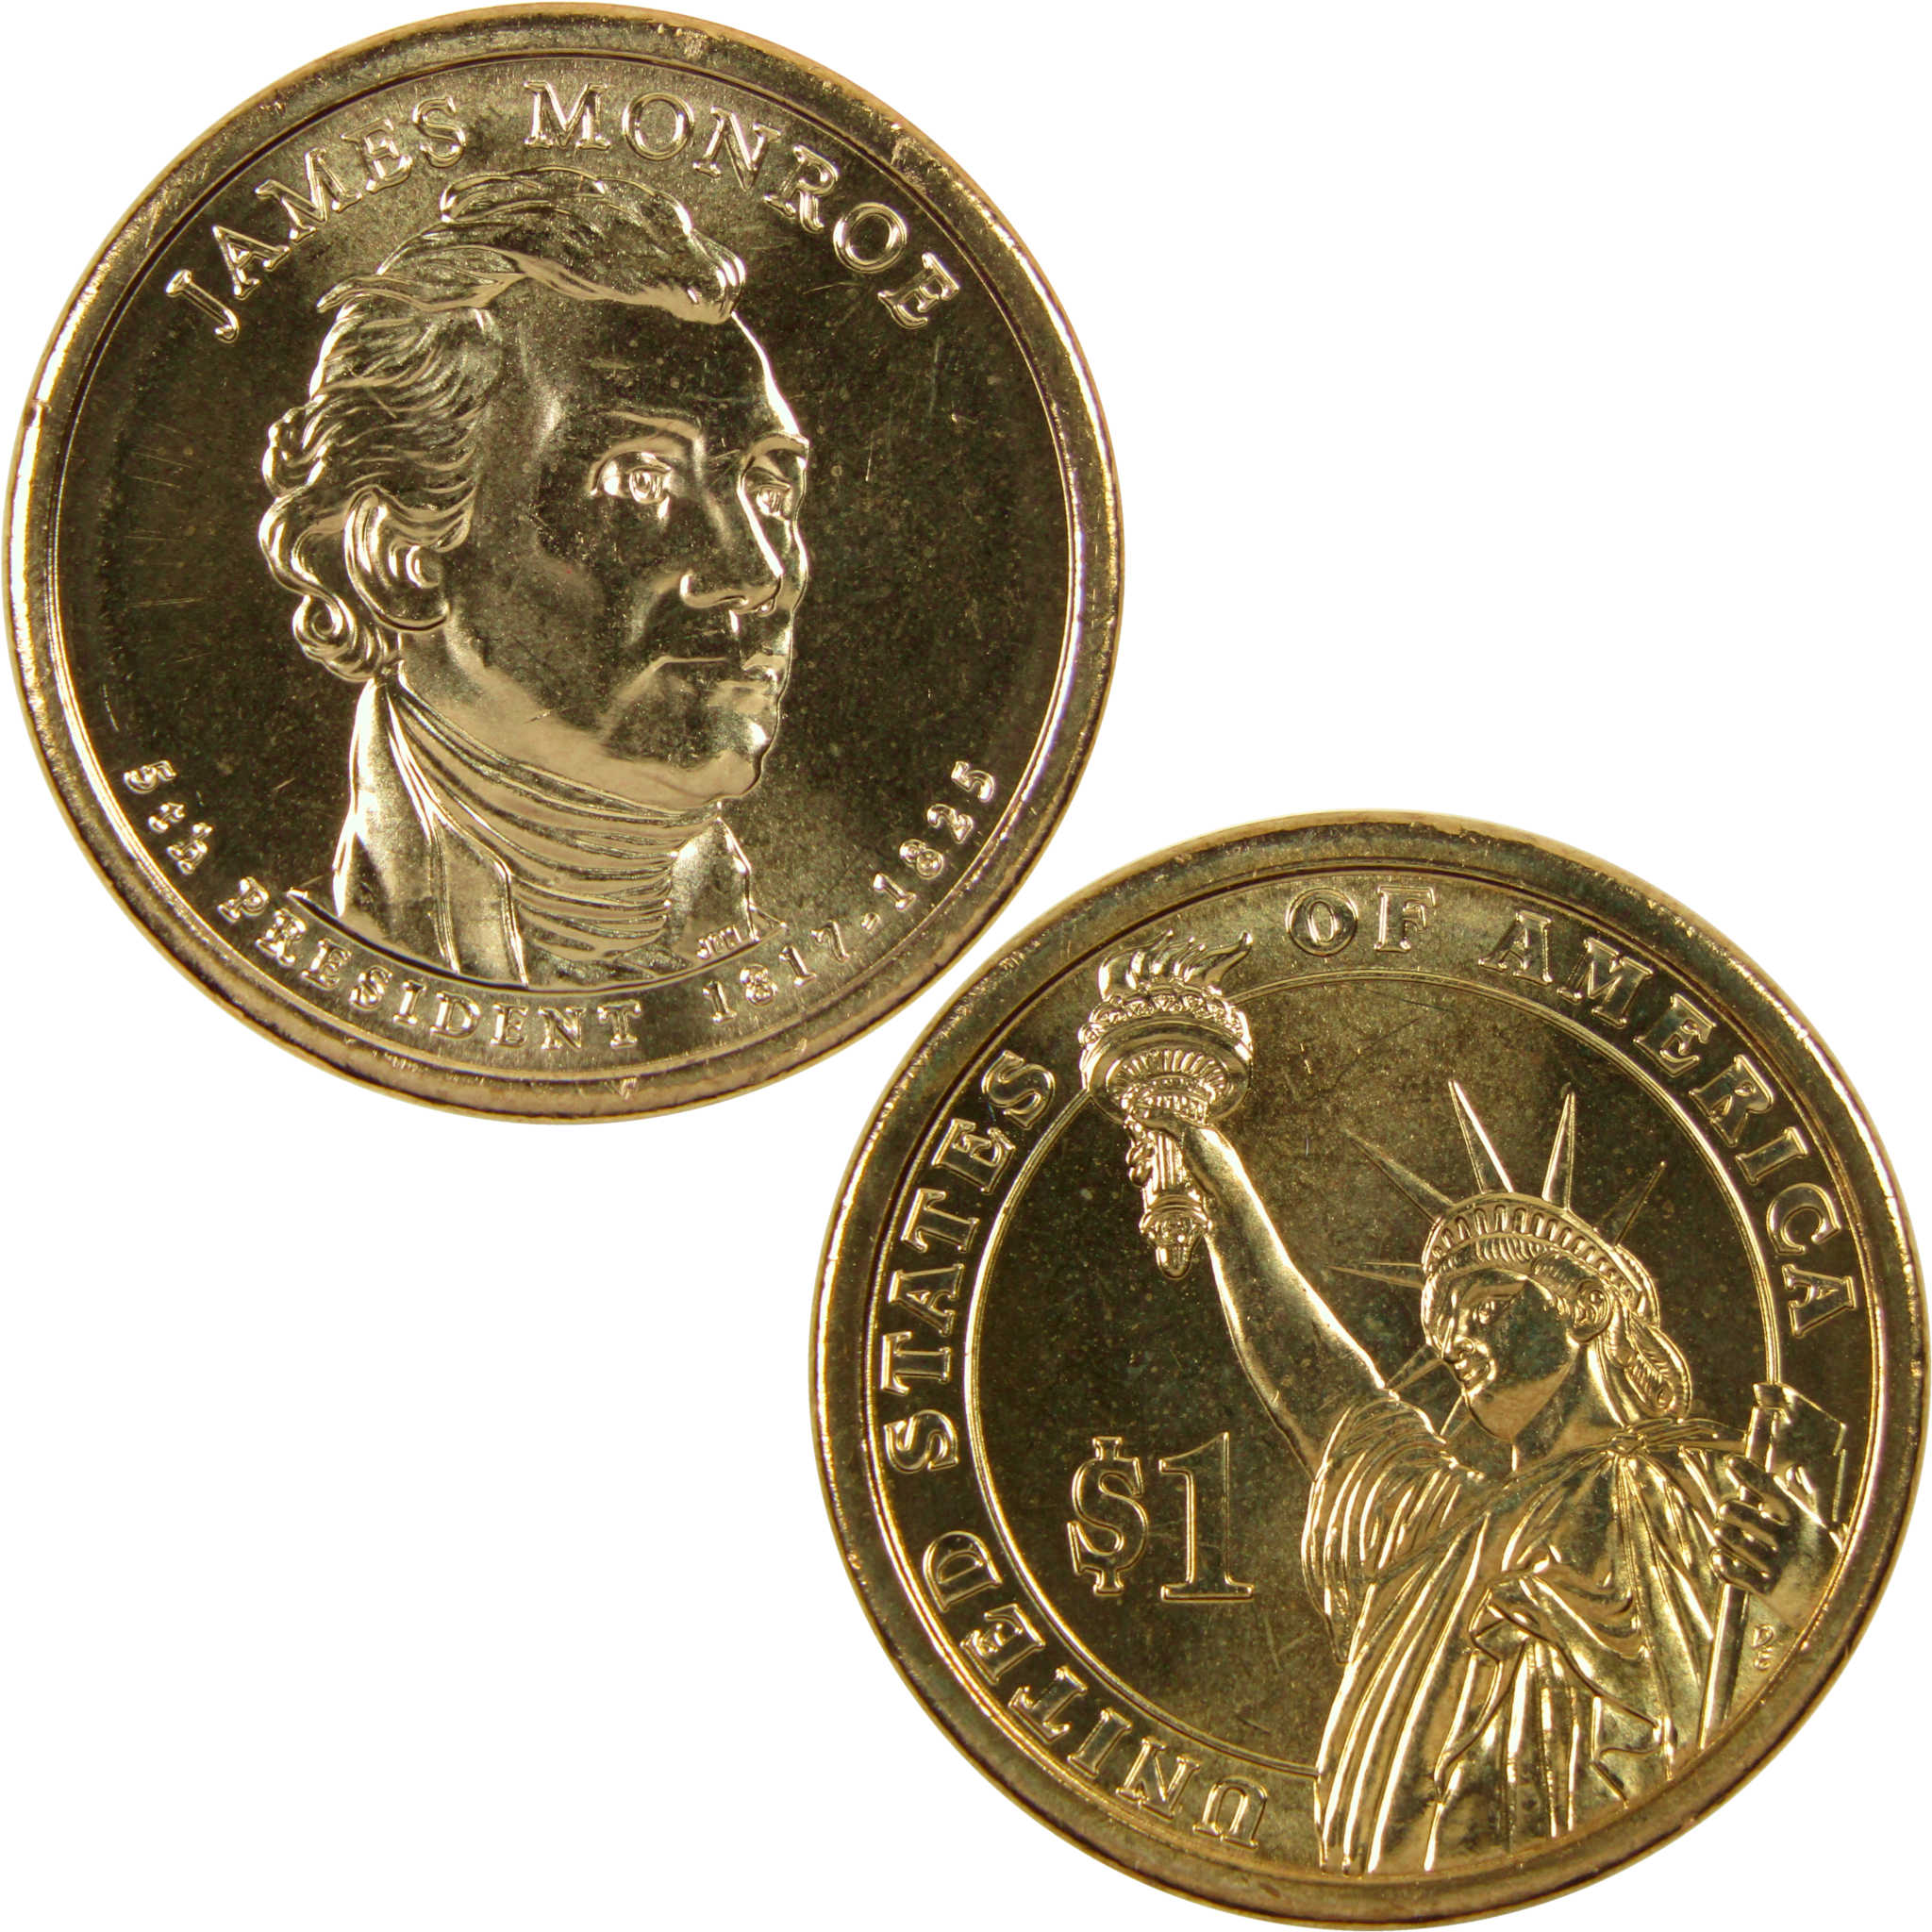 2008 D James Monroe Presidential Dollar BU Uncirculated $1 Coin